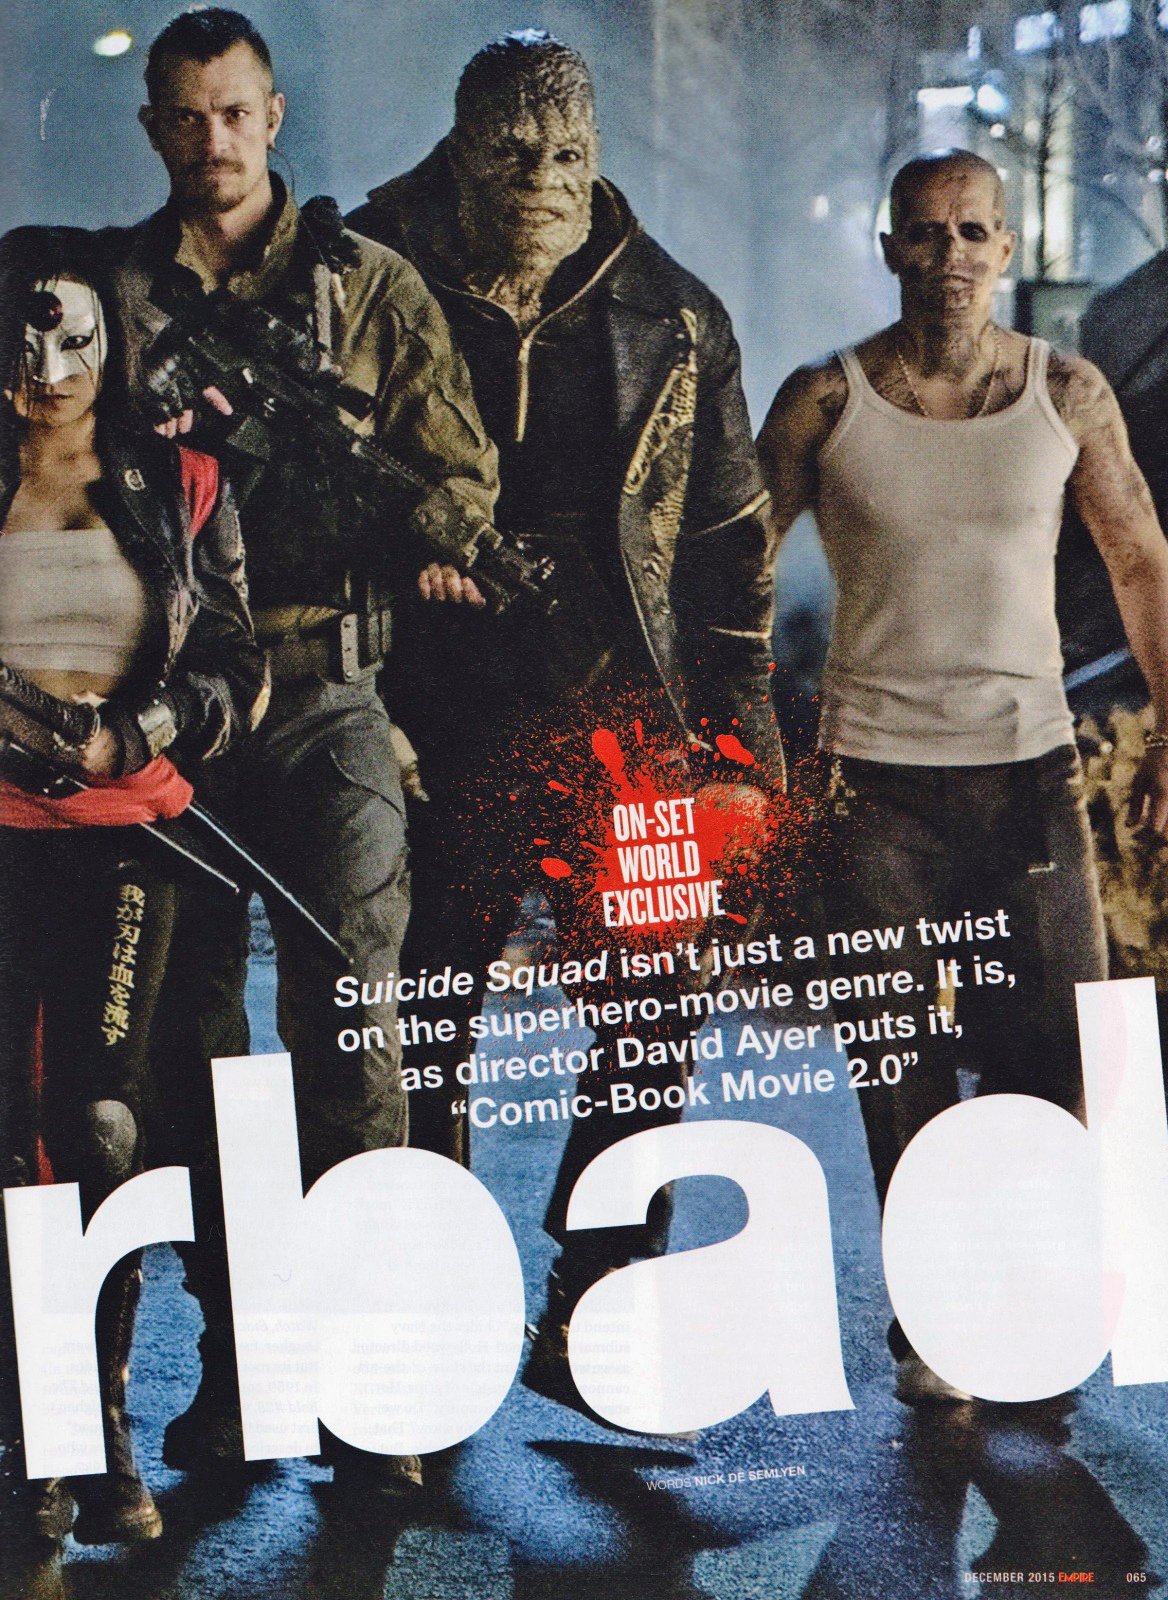 ｃｉａ こちら映画中央情報局です Suicide Squad 悪のコミックヒーロー映画 スーサイド スクワッド のジョーカーが エンパイア最新号のカバーに登場 悪役特攻部隊の新しい写真を誌面でリリース